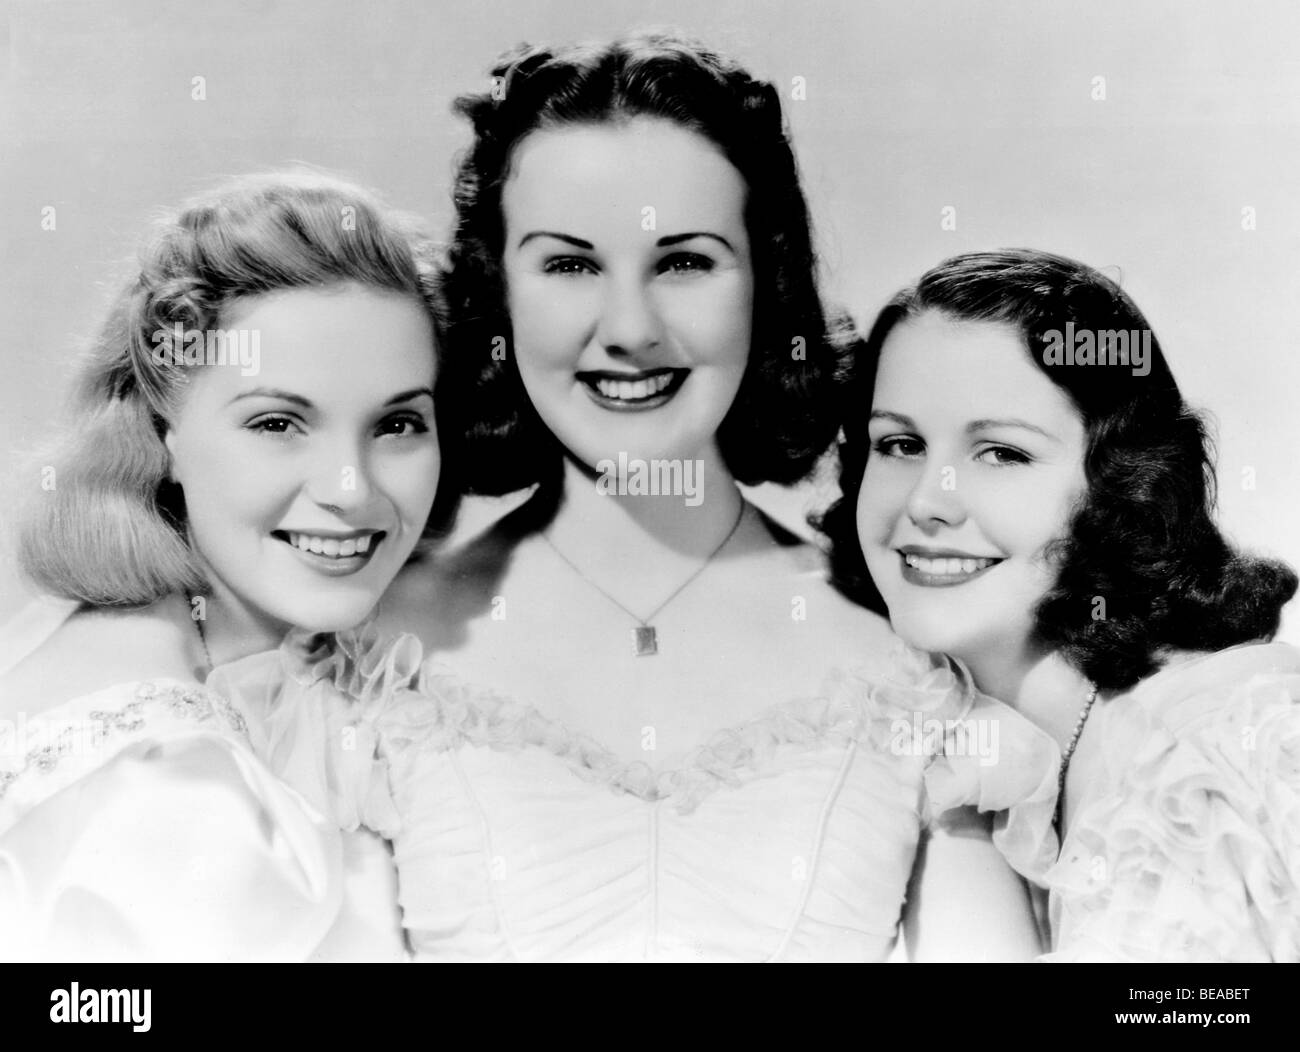 3 SMART FILLES GRANDISSENT - 1939 film Universal avec Deanna Durbin Banque D'Images